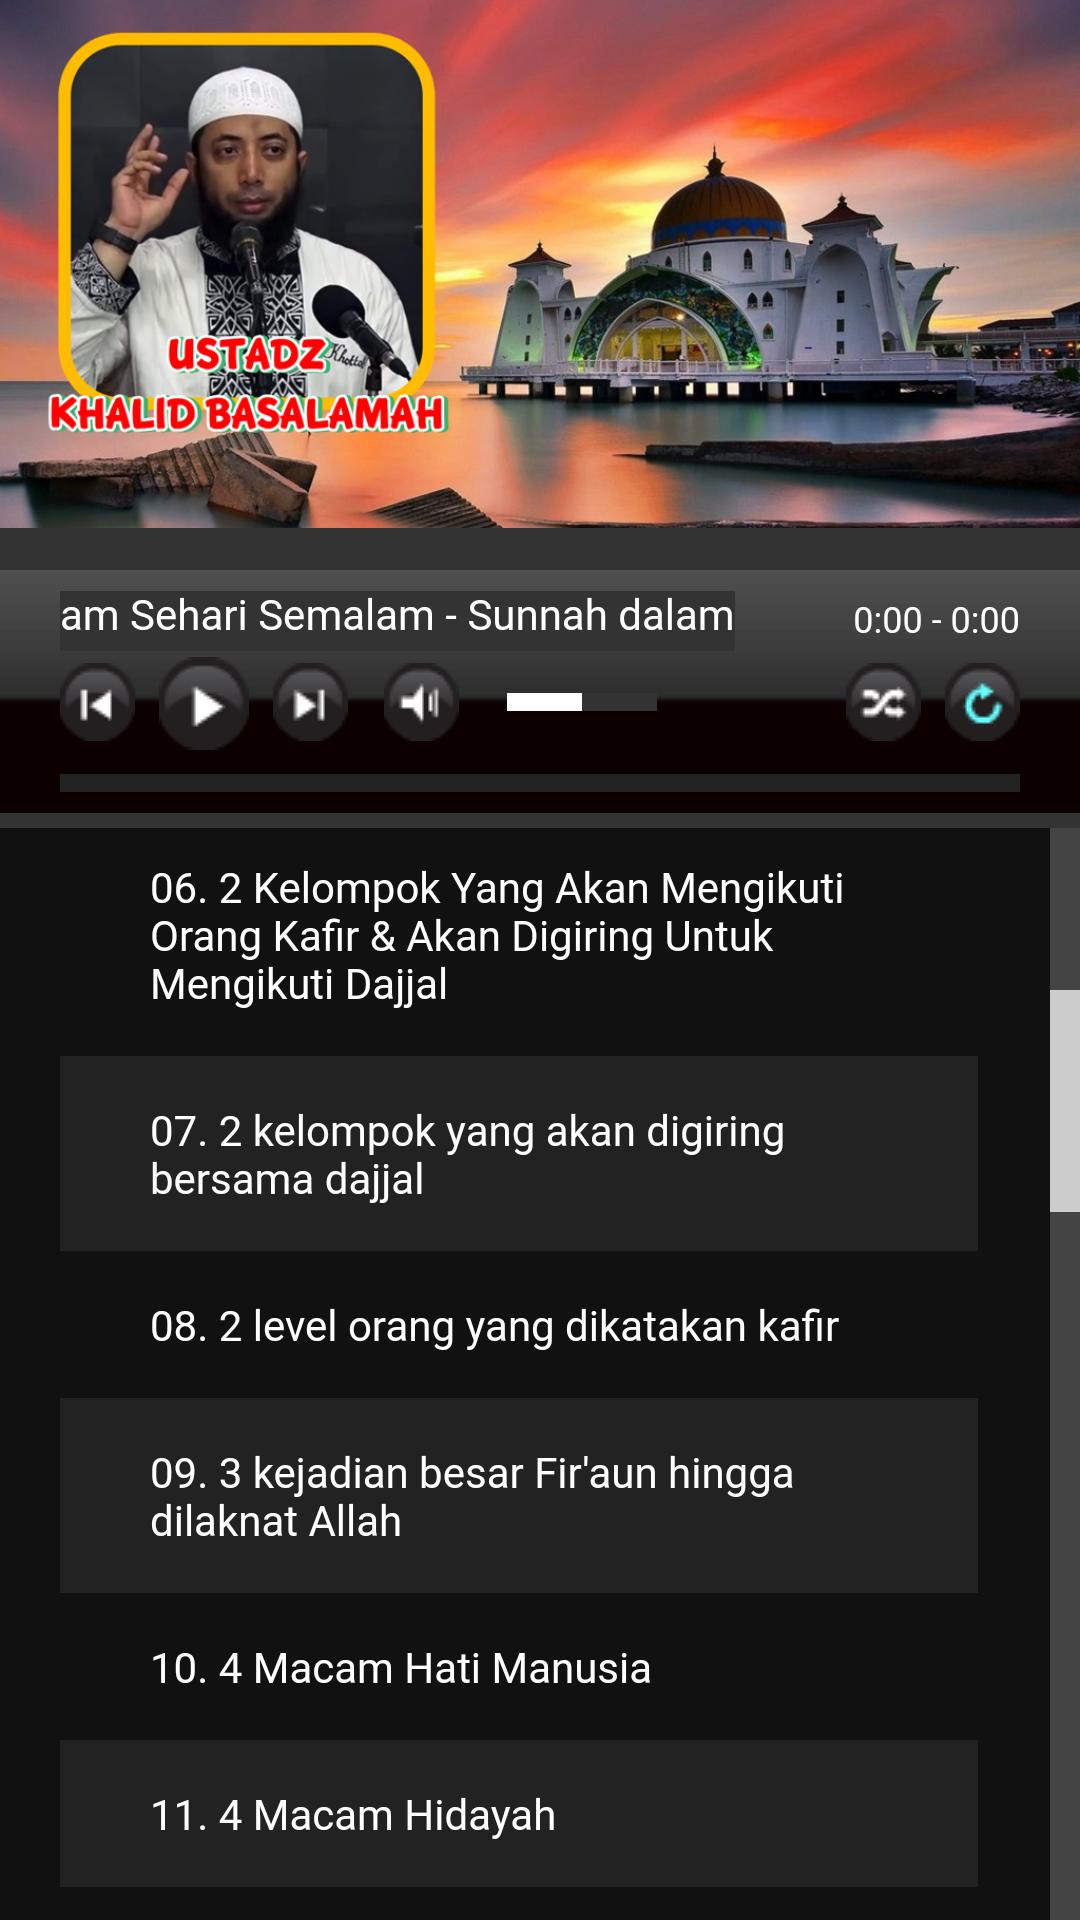 Kumpulan Ceramah Ustadz Khalid Basalamah For Android Apk Download